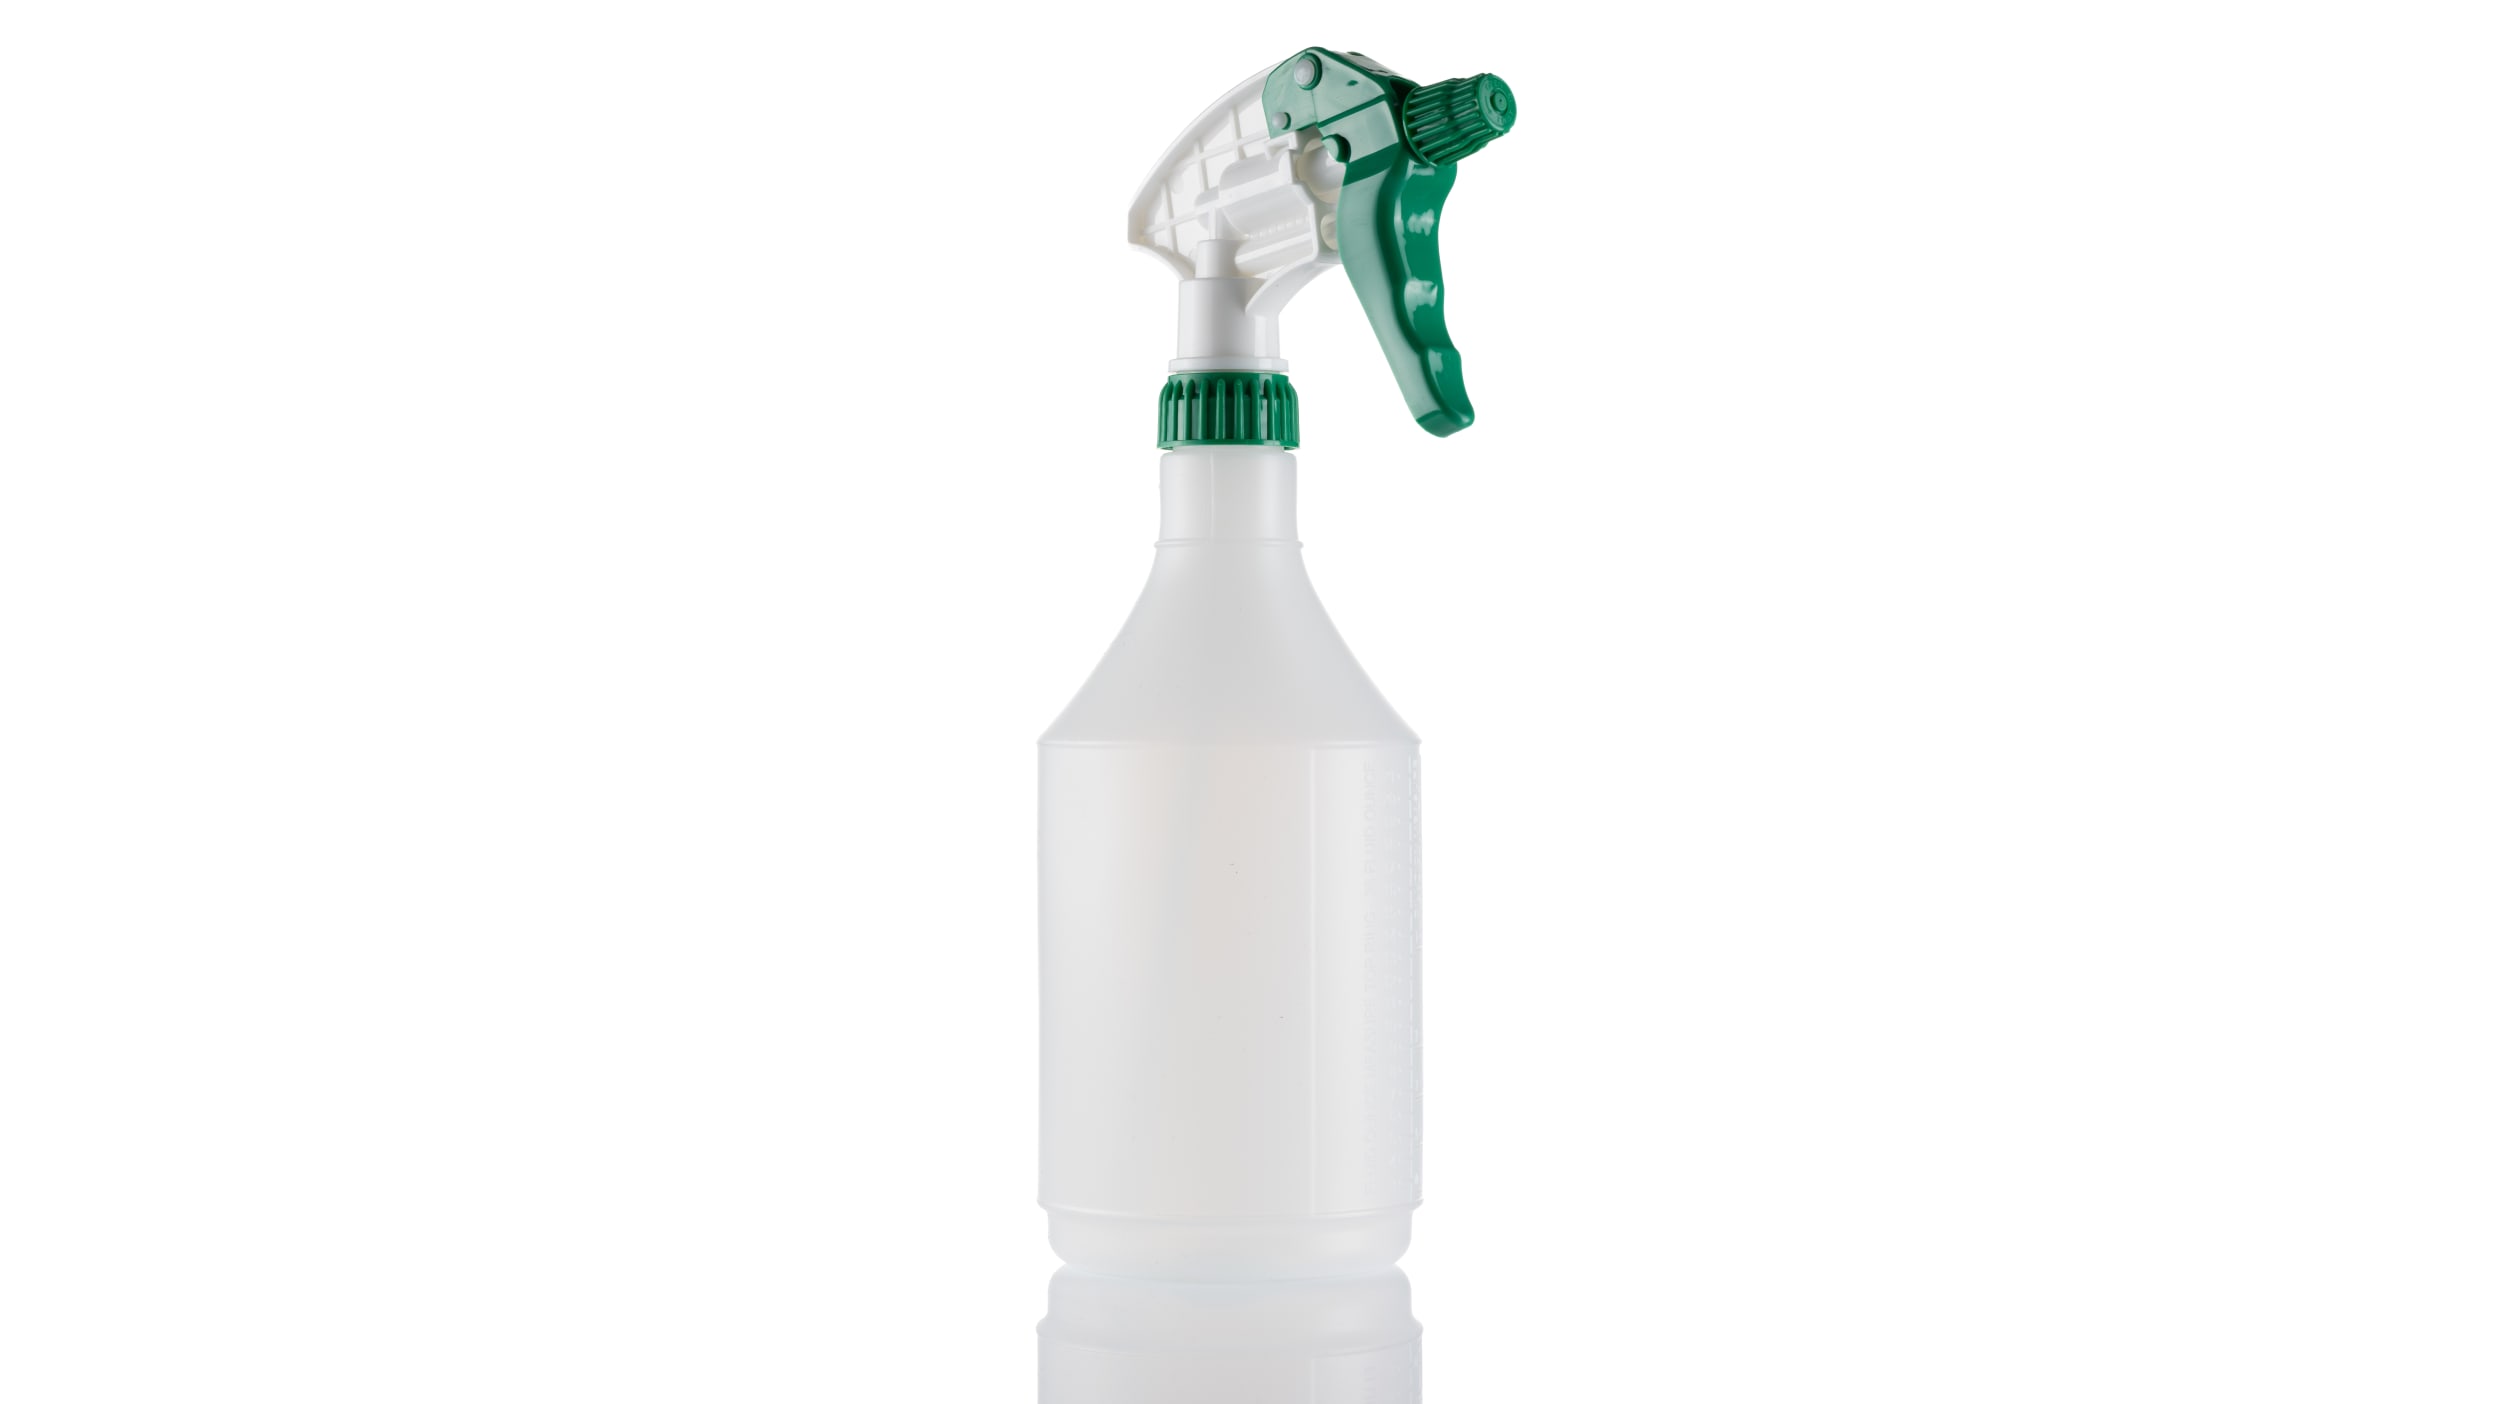 101956/G, Robert Scott Green Spray Bottle, 750ml